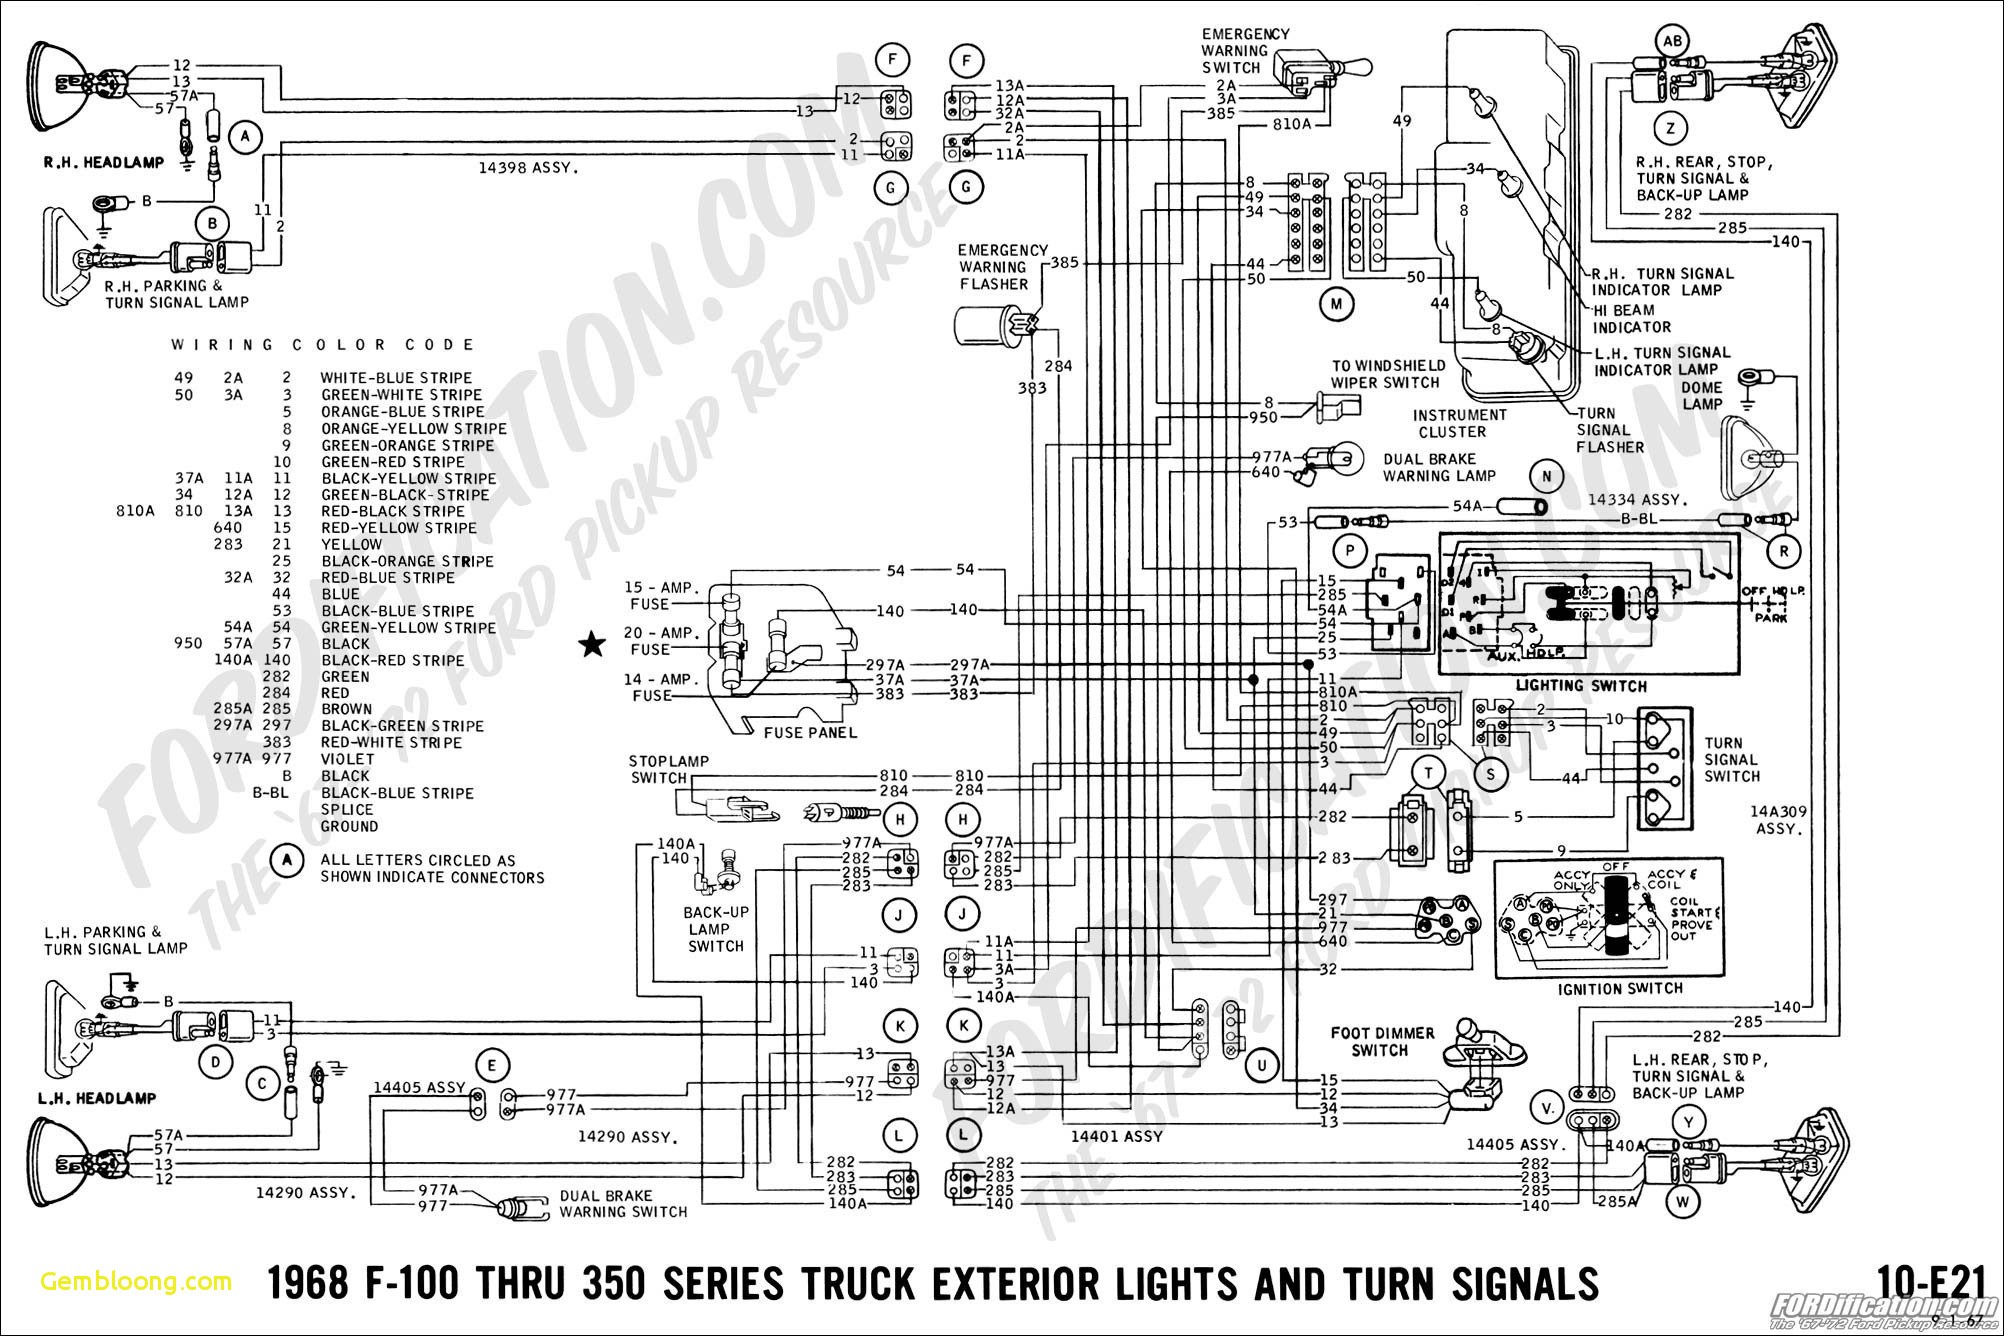 Trailer Light Wiring Diagram 4 Wire 10 ford Trucks Wiring Diagrams Free – Wiring Diagram Of Trailer Light Wiring Diagram 4 Wire